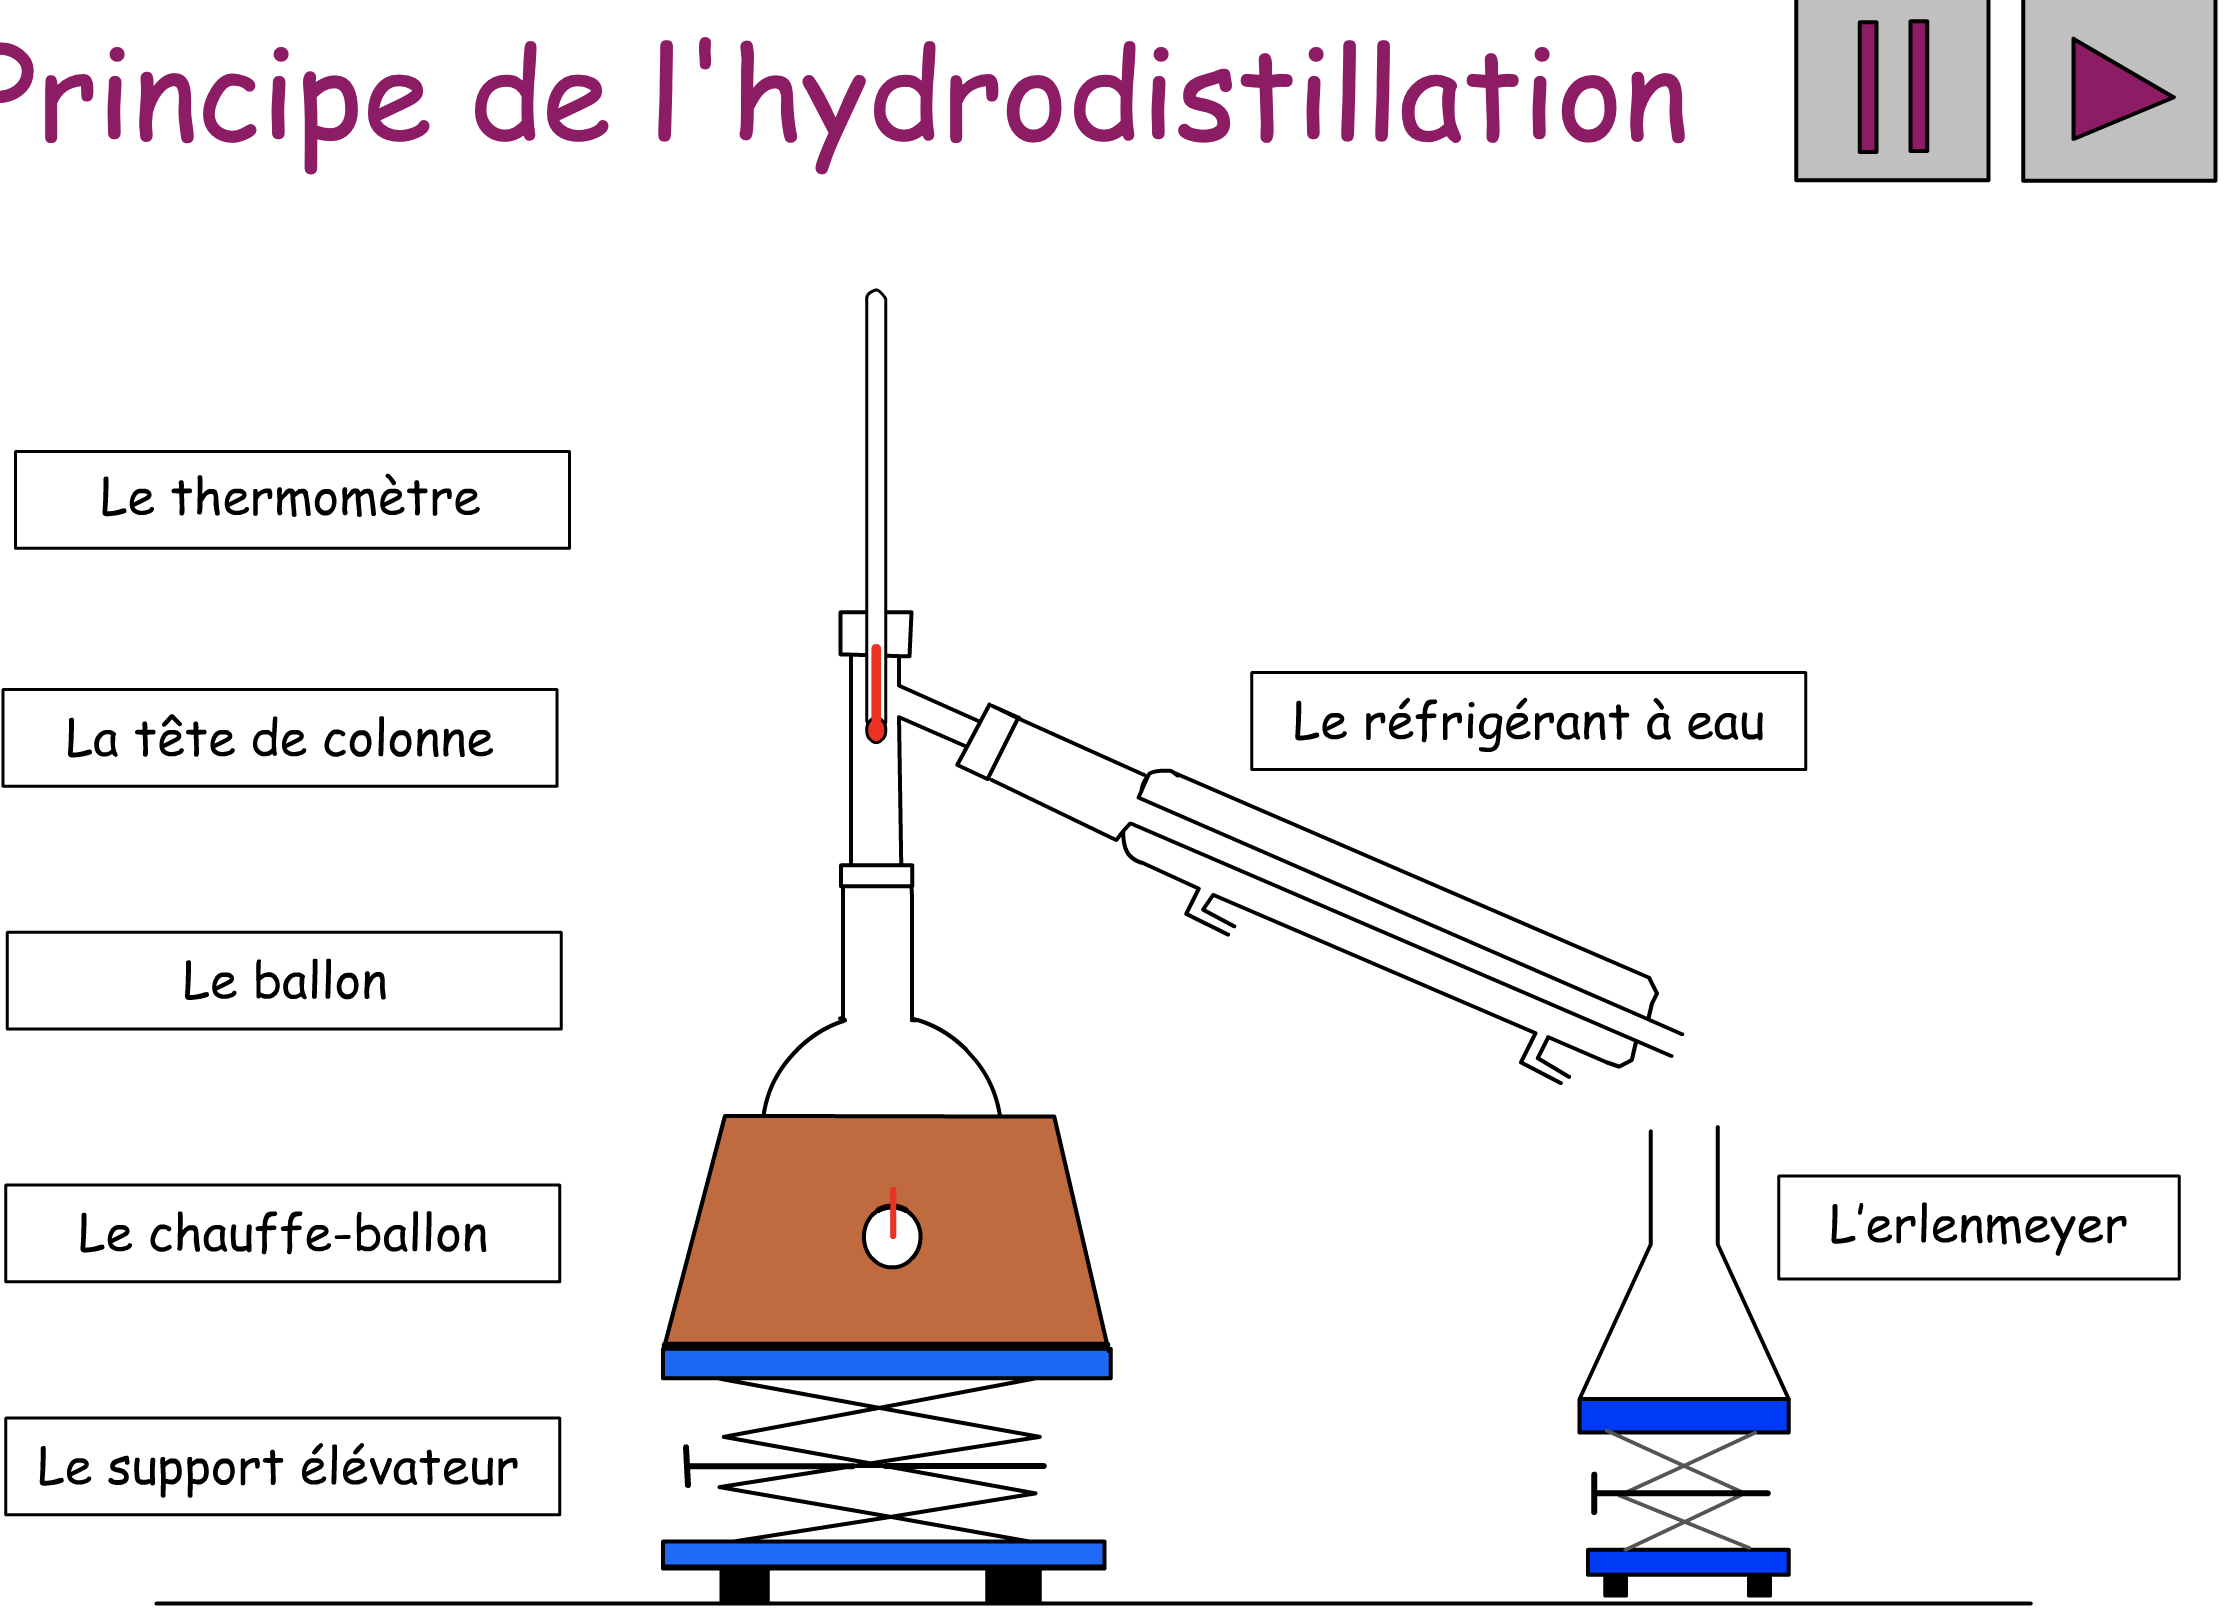 Hydrodistillation